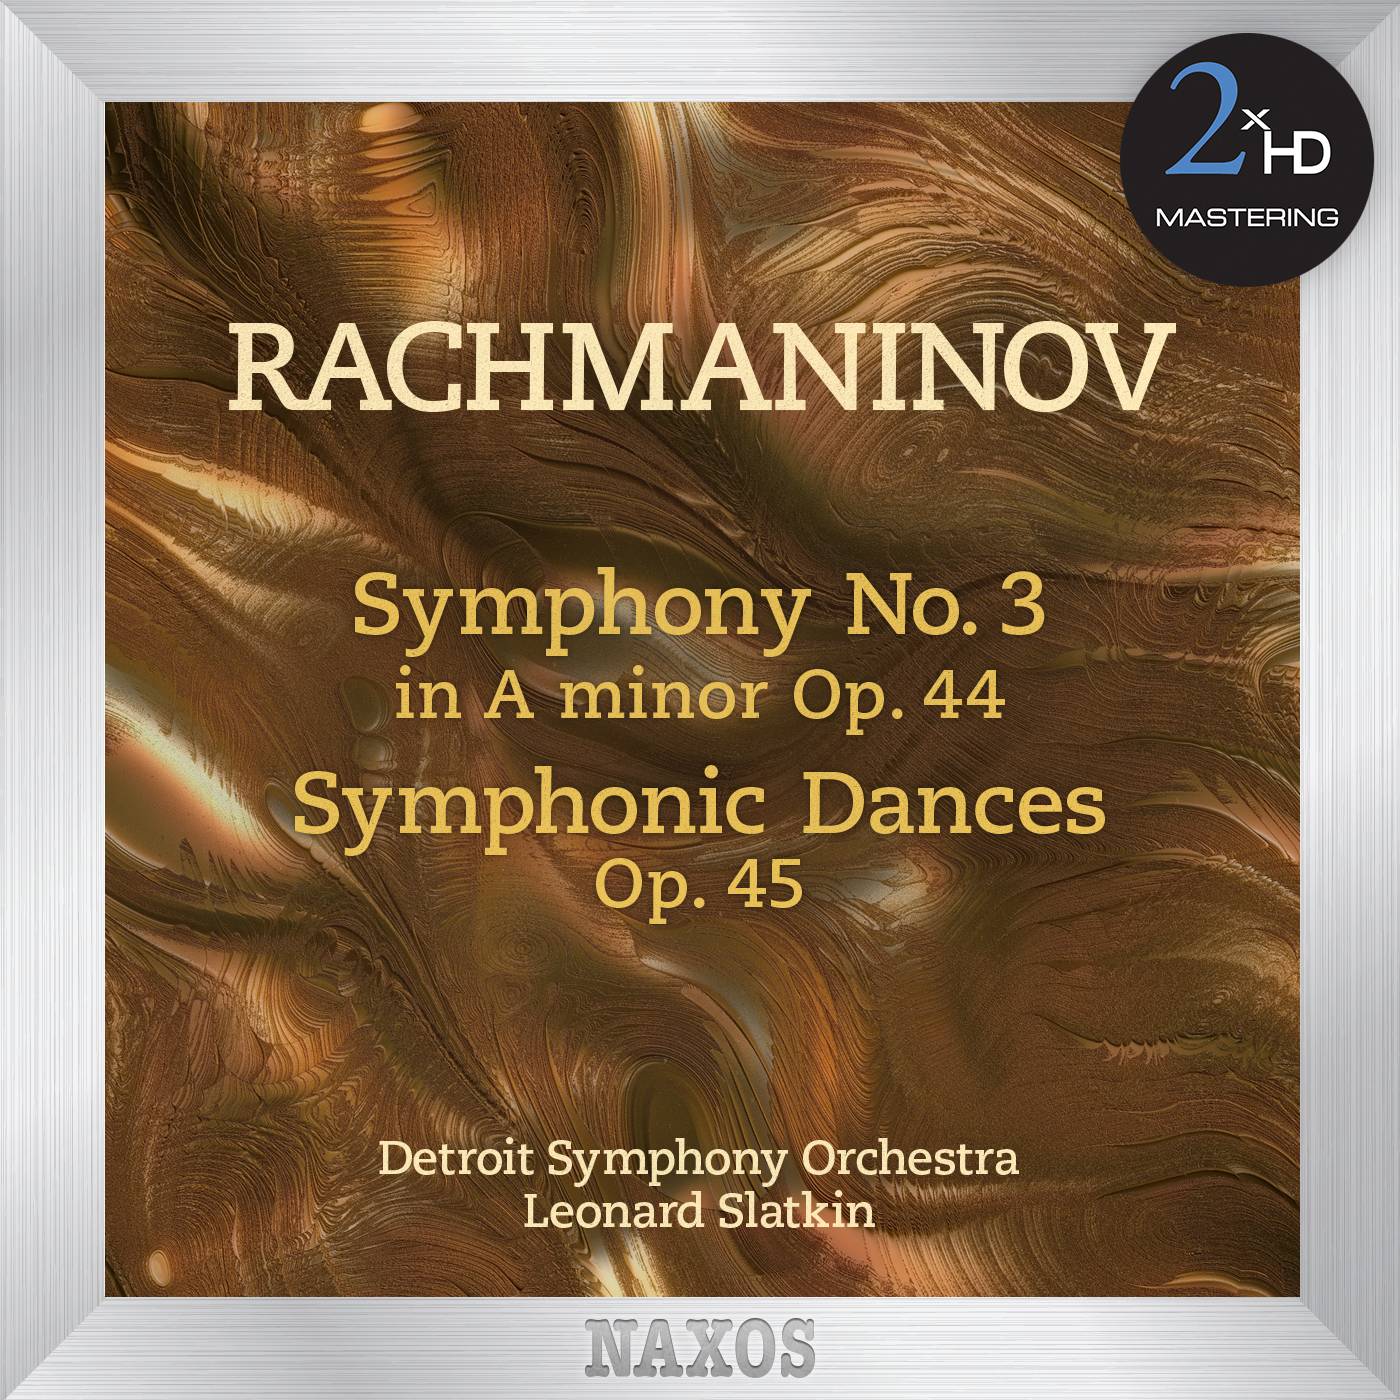 Detroit Symphony Orchestra & Leonard Slatkin - Rachmaninov: Symphony No. 3 in A minor Op. 44 - Symphonic Dances Op. 45 (2013/2015) [FLAC 24bit/192kHz]